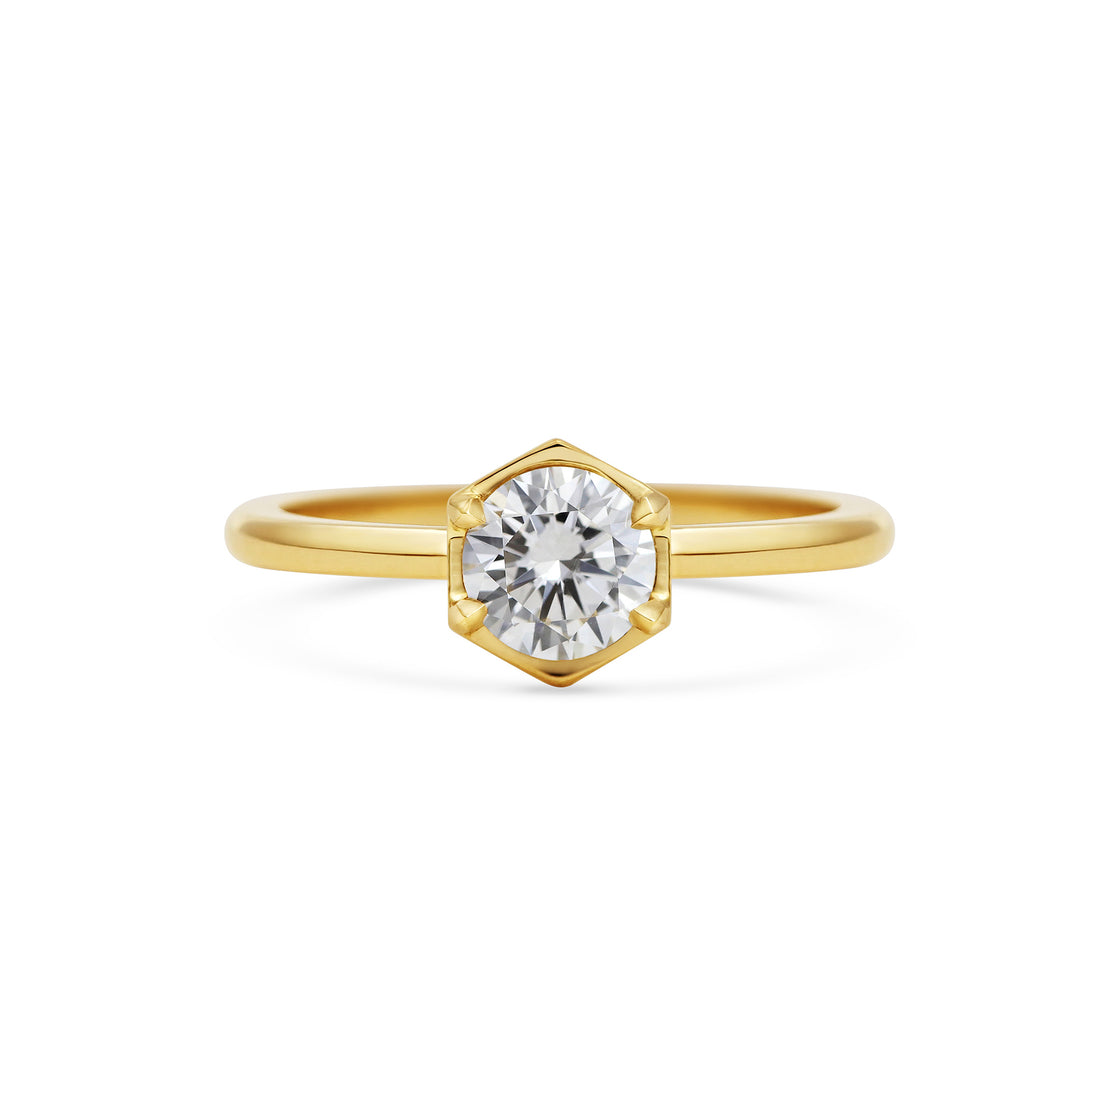  Aquila Solitaire Diamond Ring by Rachel Boston | The Cut London